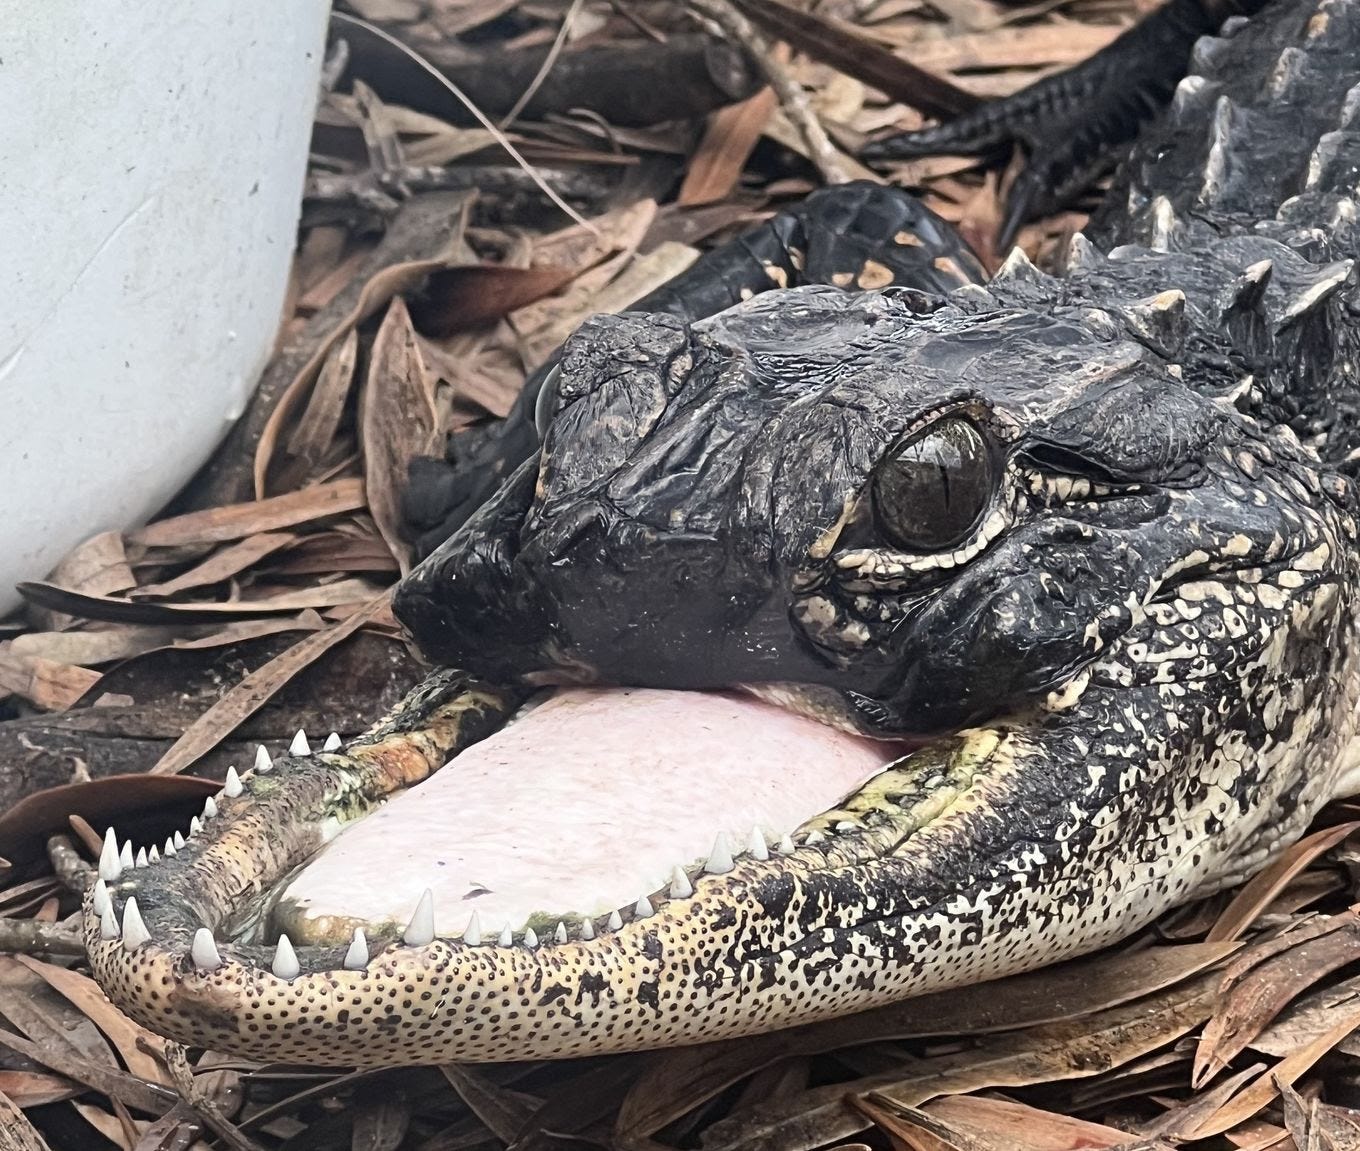 The injured alligator at her new home in Gatorland. (Savannah Boan)